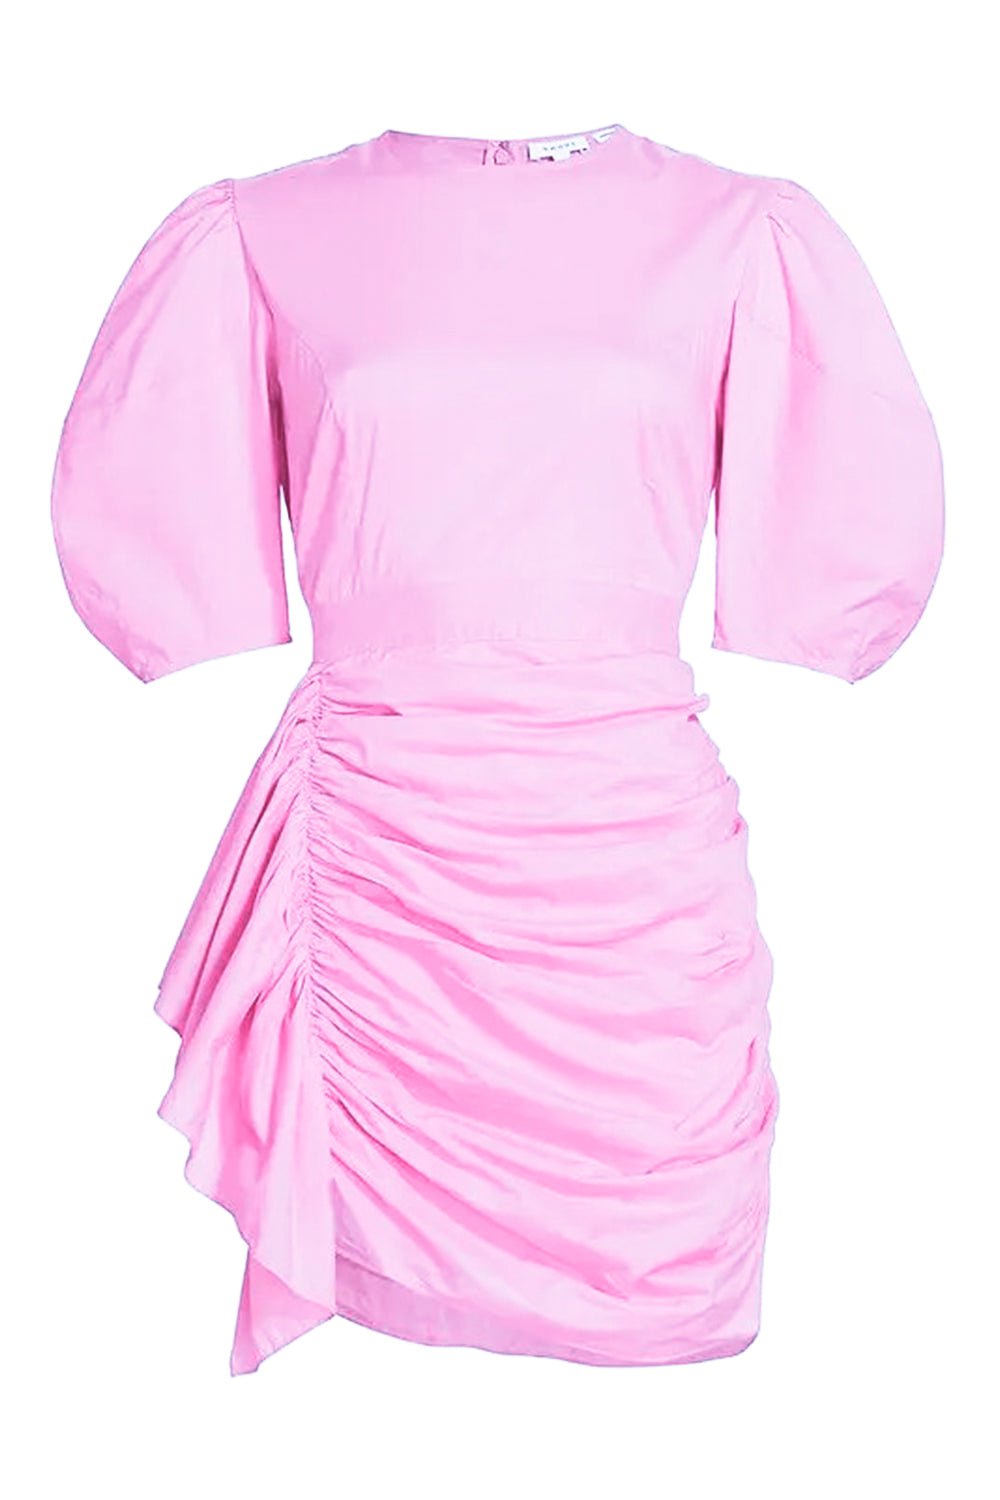 Pia Dress - Prism Pink CLOTHINGDRESSCASUAL RHODE   